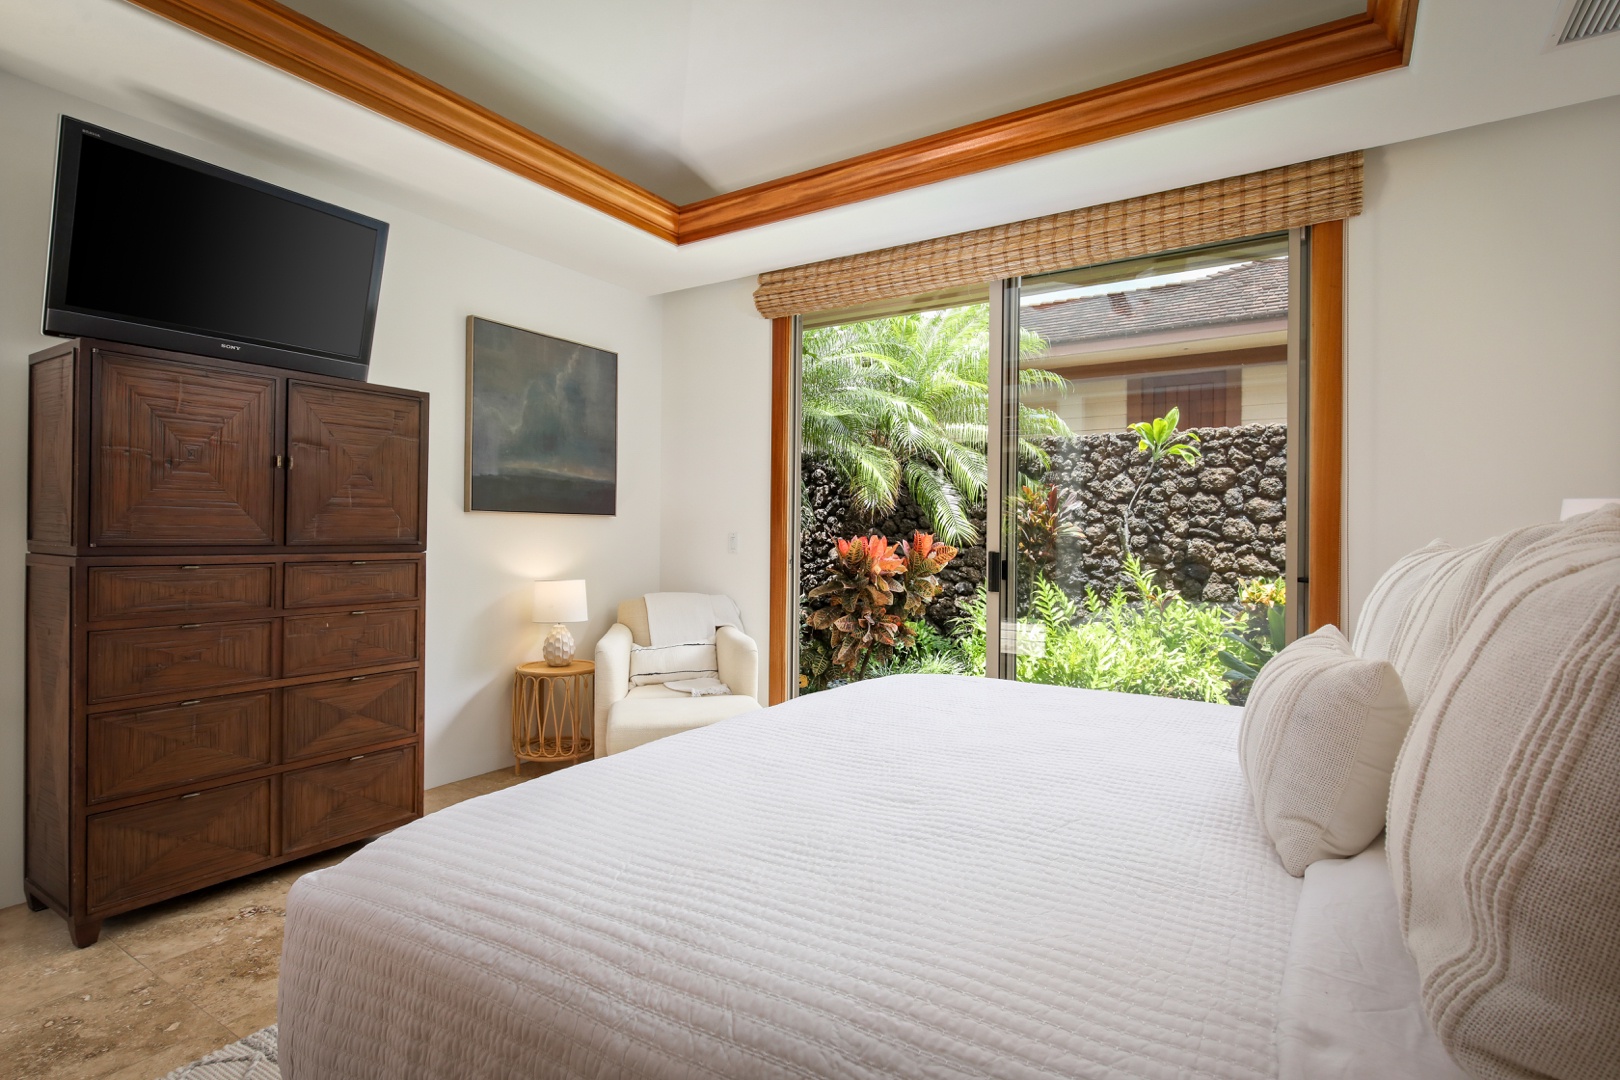 Kailua Kona Vacation Rentals, 4BD Pakui Street (147) Estate Home at Four Seasons Resort at Hualalai - Reverse view of Guest Suite #4.